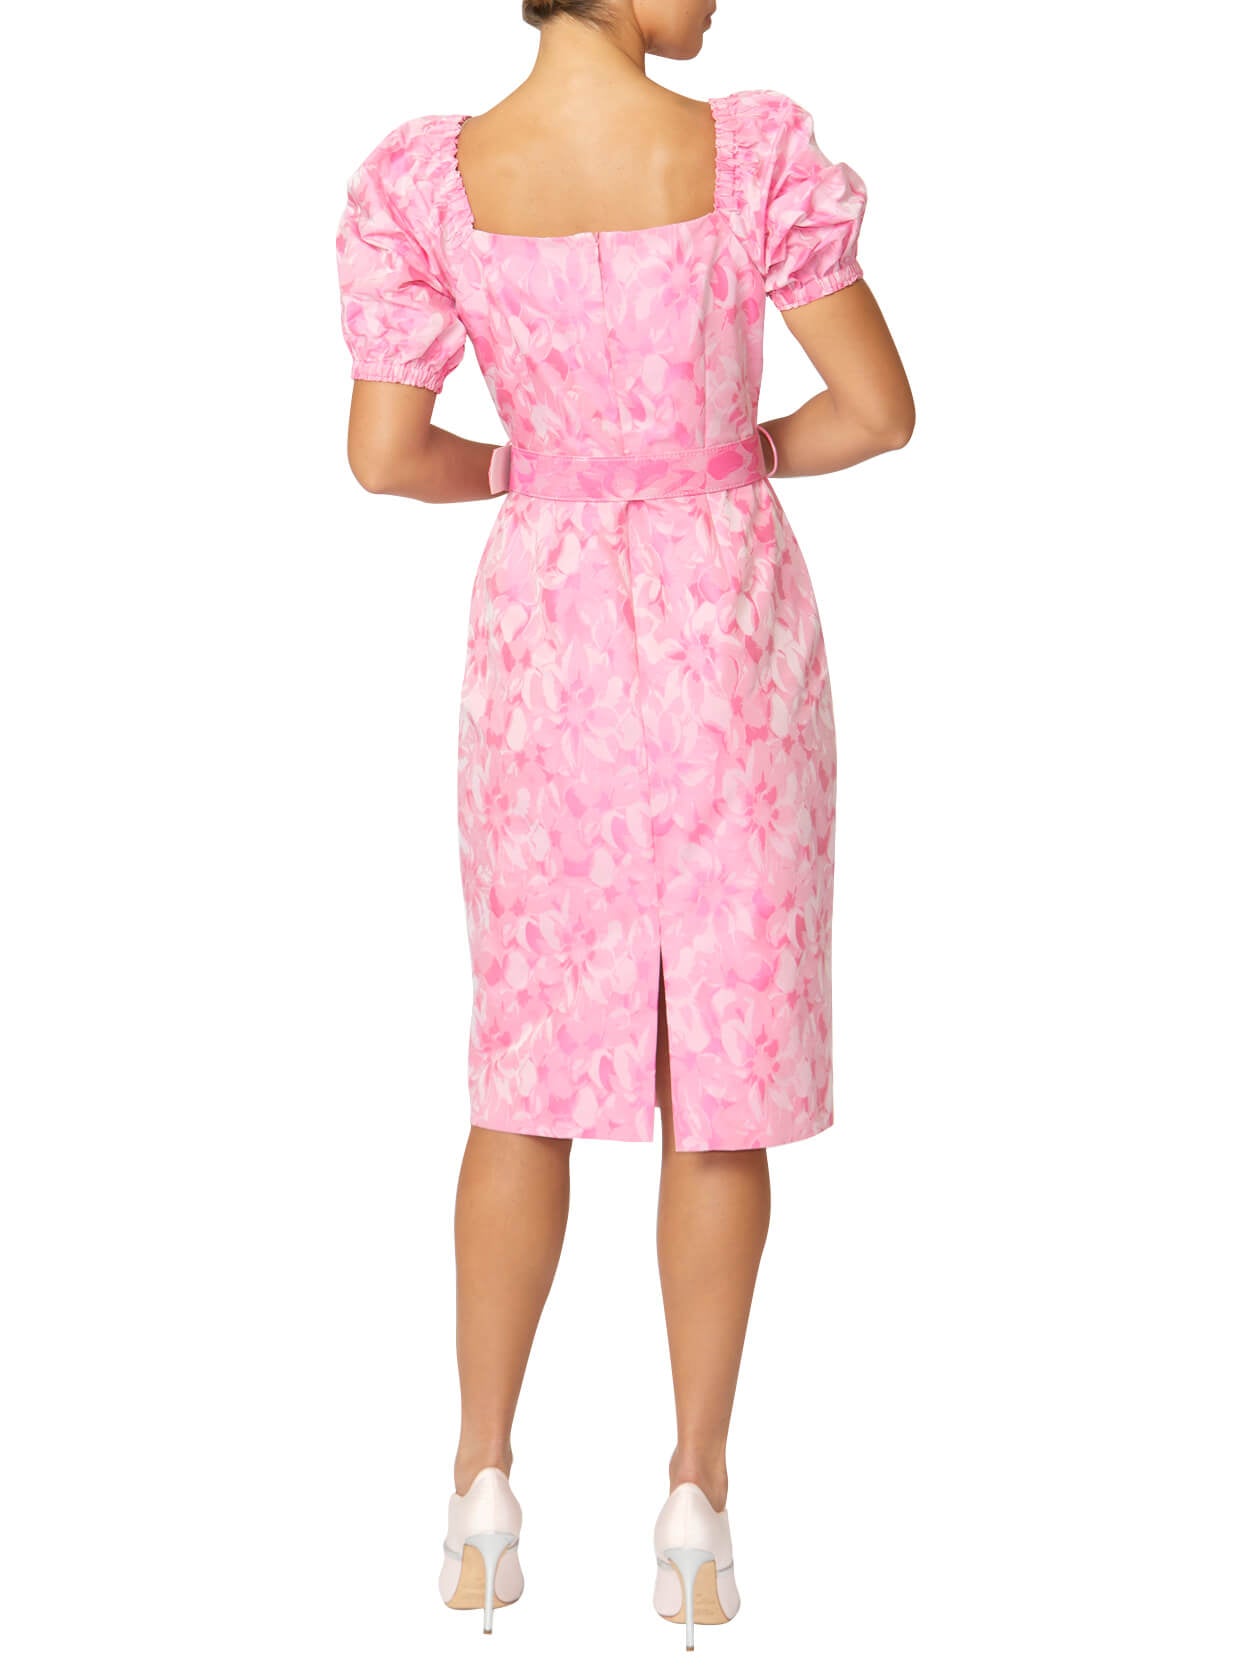 Holland Pink Jacquard Dress